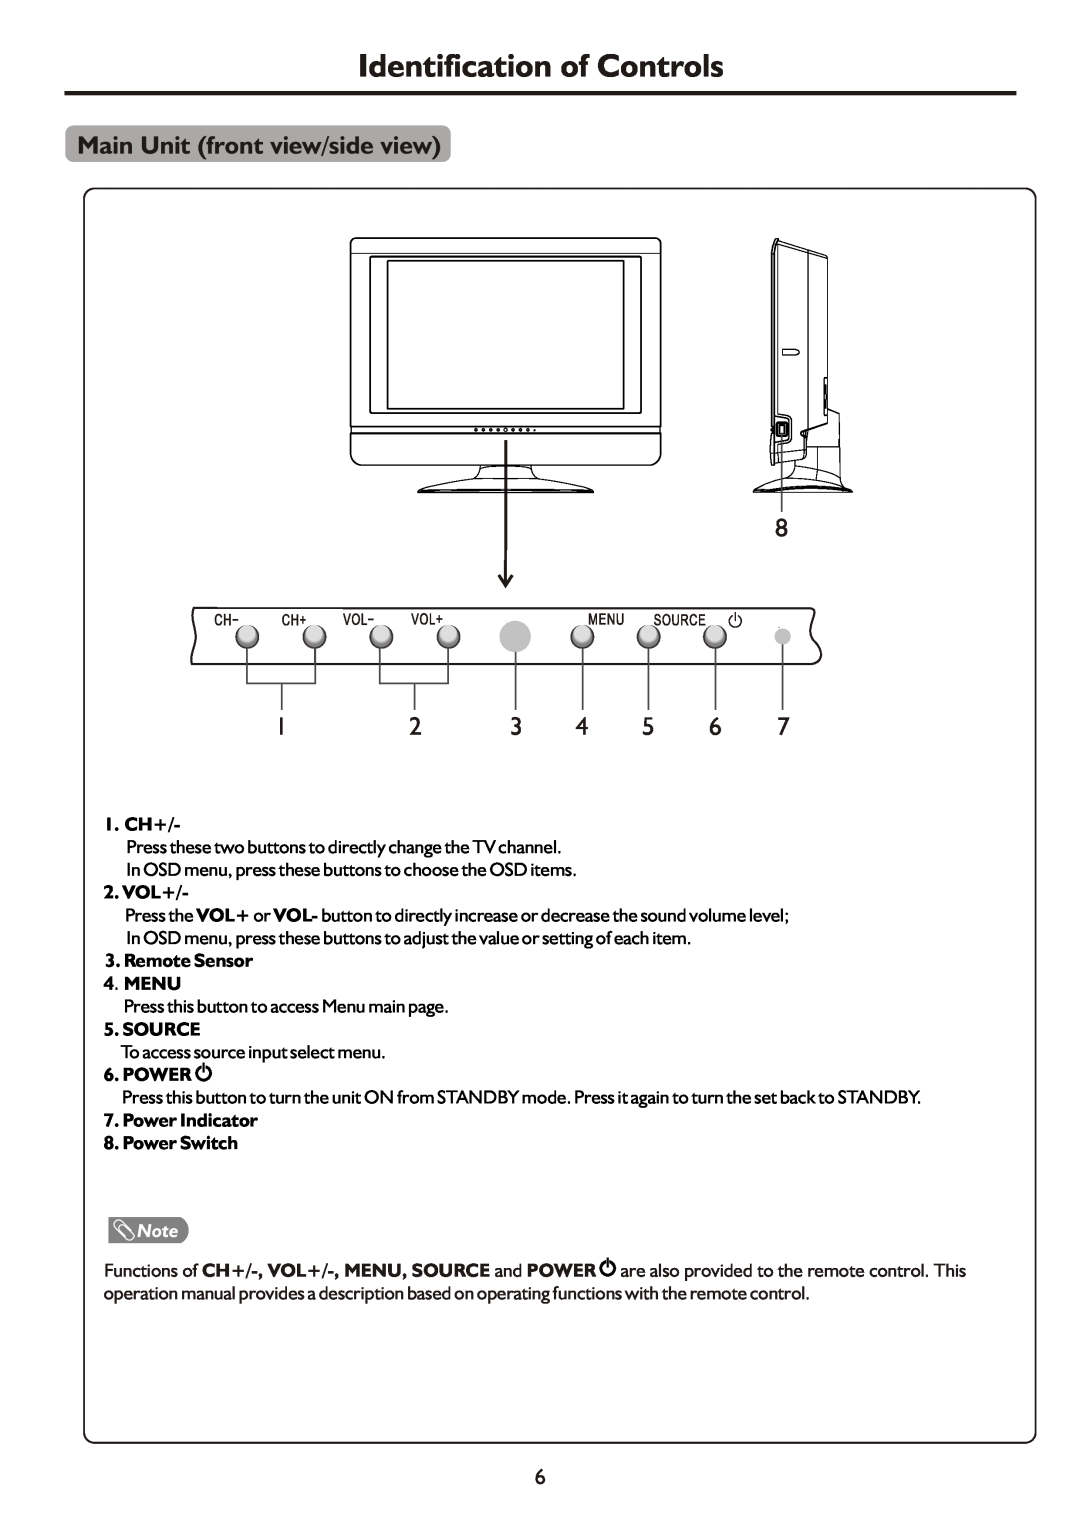 Palsonic TFTV490HD Identification of Controls, Main Unit front view/side view, 1. CH+, Vol+, Remote Sensor 4.MENU, Source 